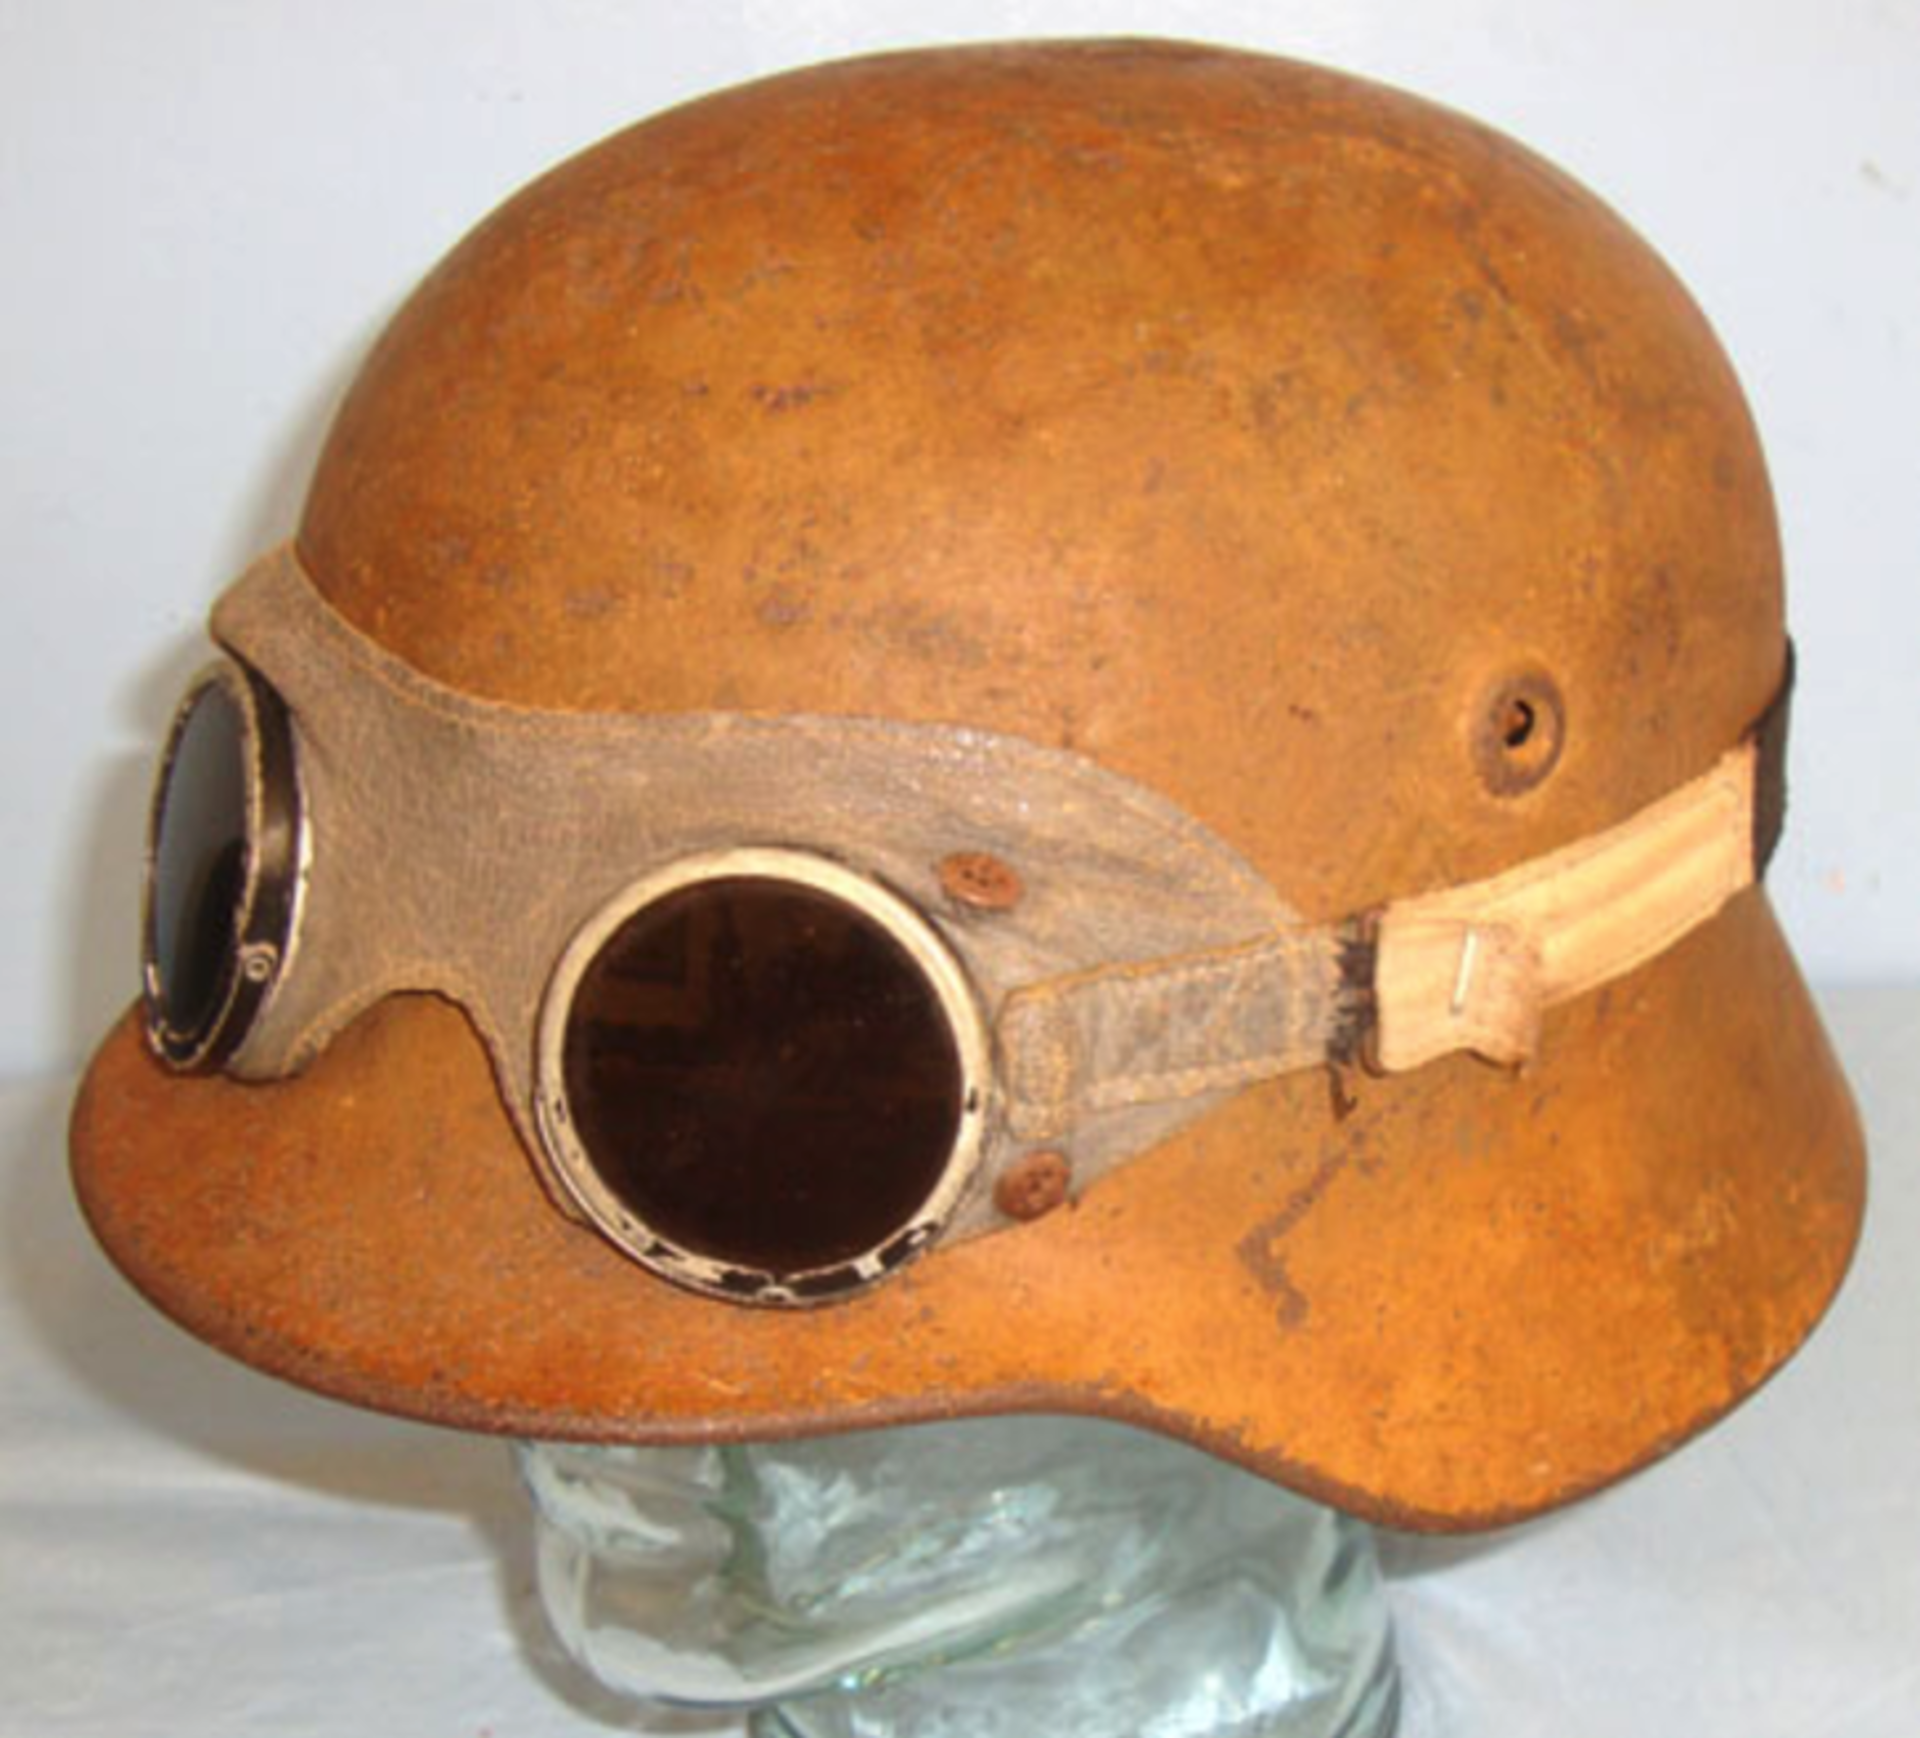 ORIGINAL, WW2 Nazi German Luftwaffe M40 Combat Helmet By ‘Q’ (Quist) - Image 2 of 3